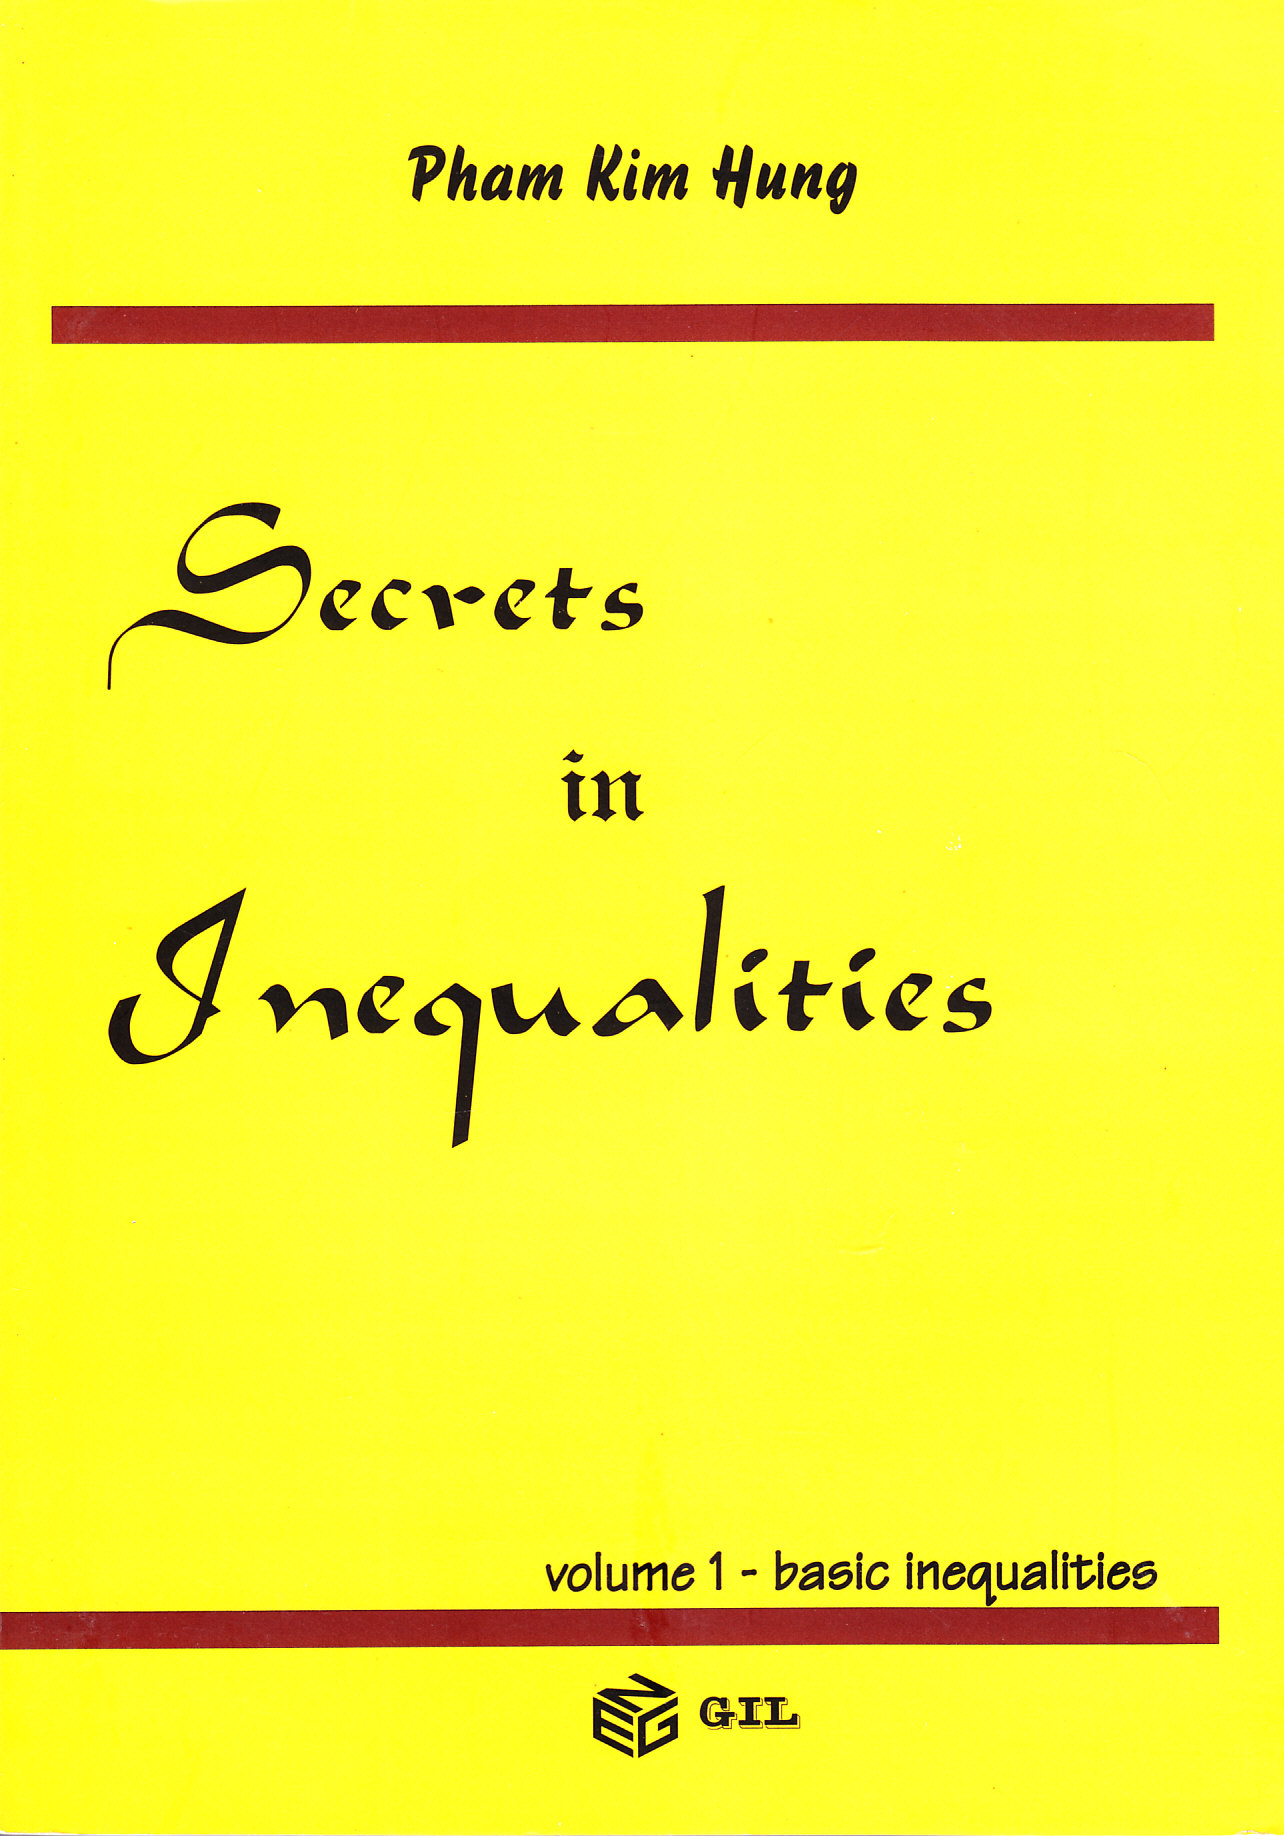 Secrets in inequalities vol.1: Basic inequalities - Pham Kim Hung